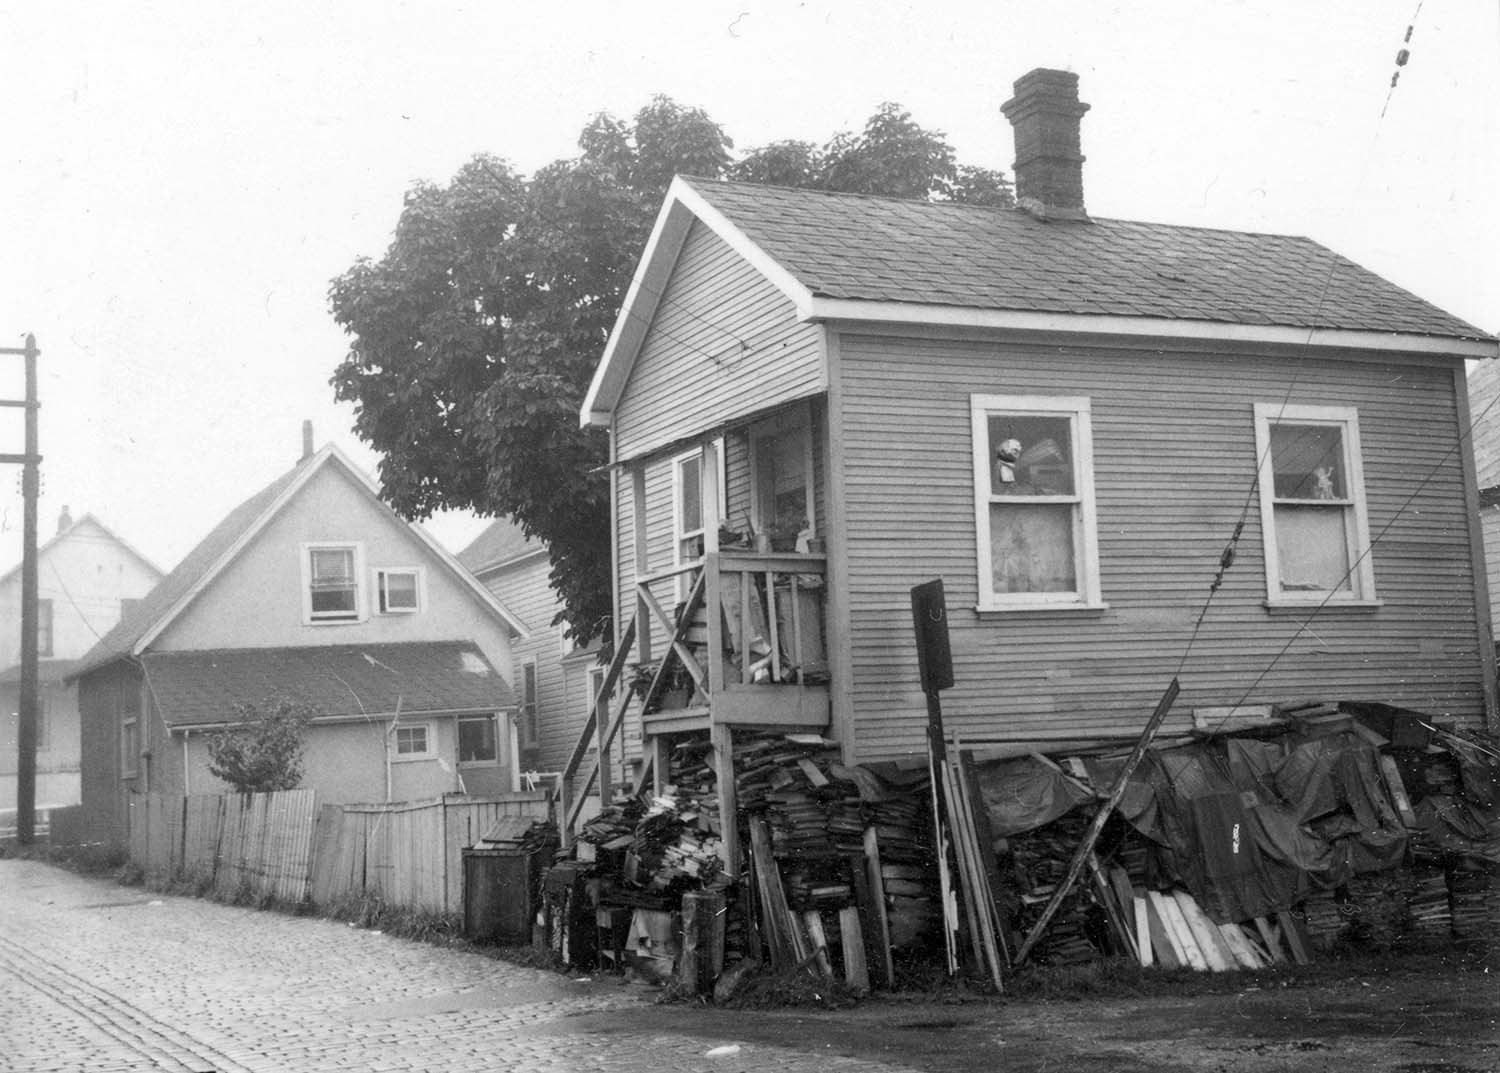 218 Union Street [back], 1969. Reference code COV-S168-: CVA 203-37 